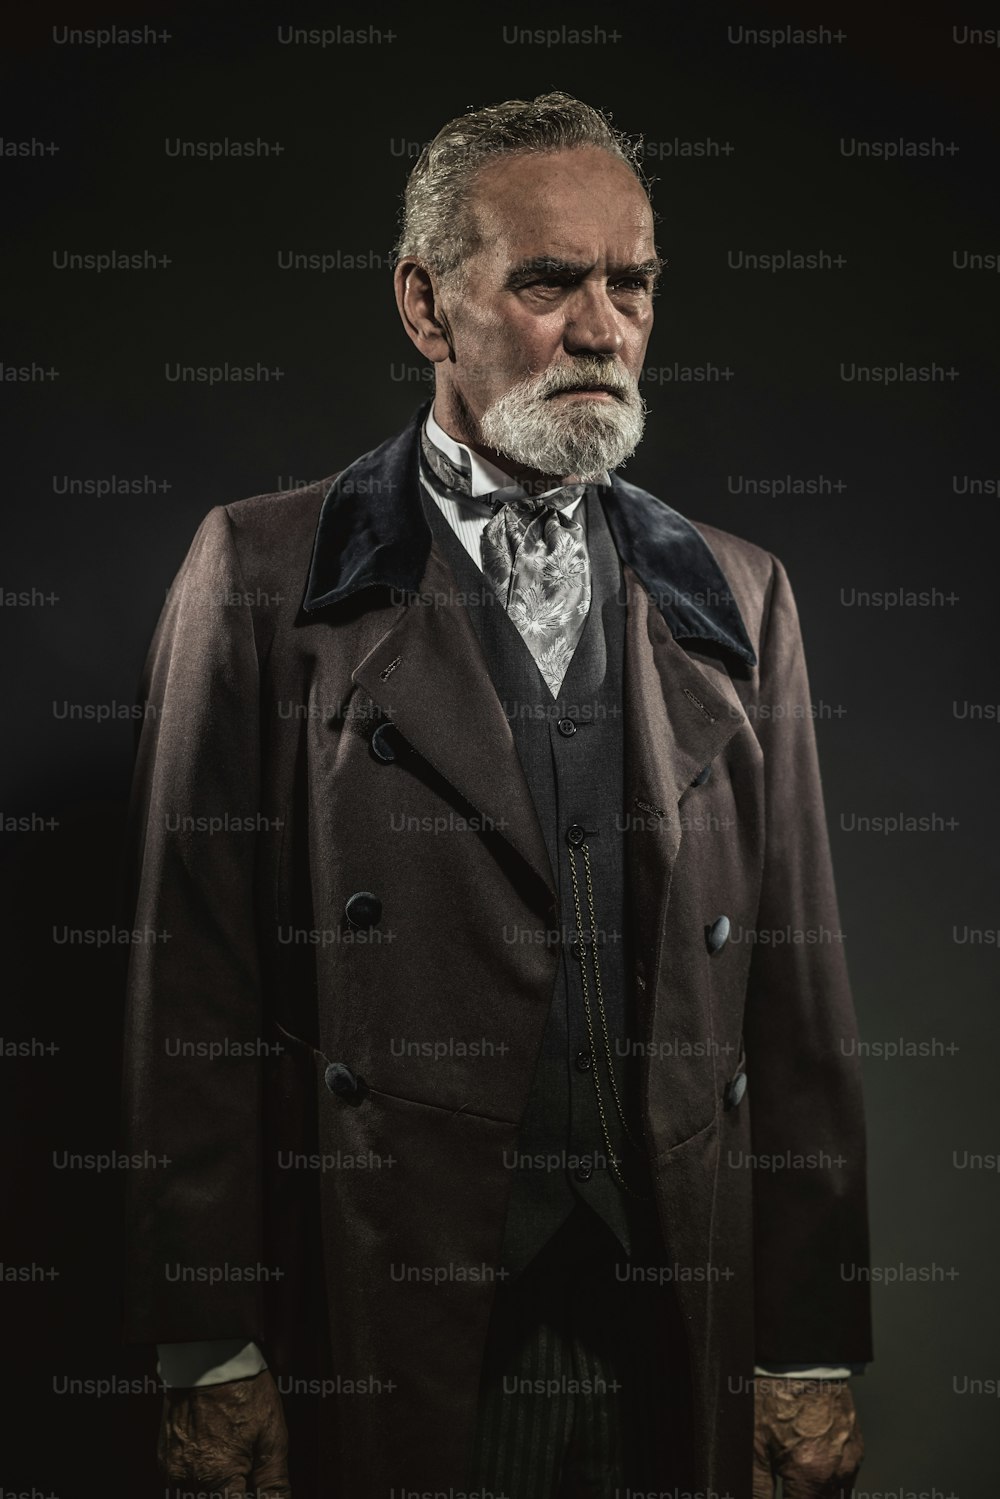 Vintage characteristic senior man with gray hair and beard. Studio shot against dark background.